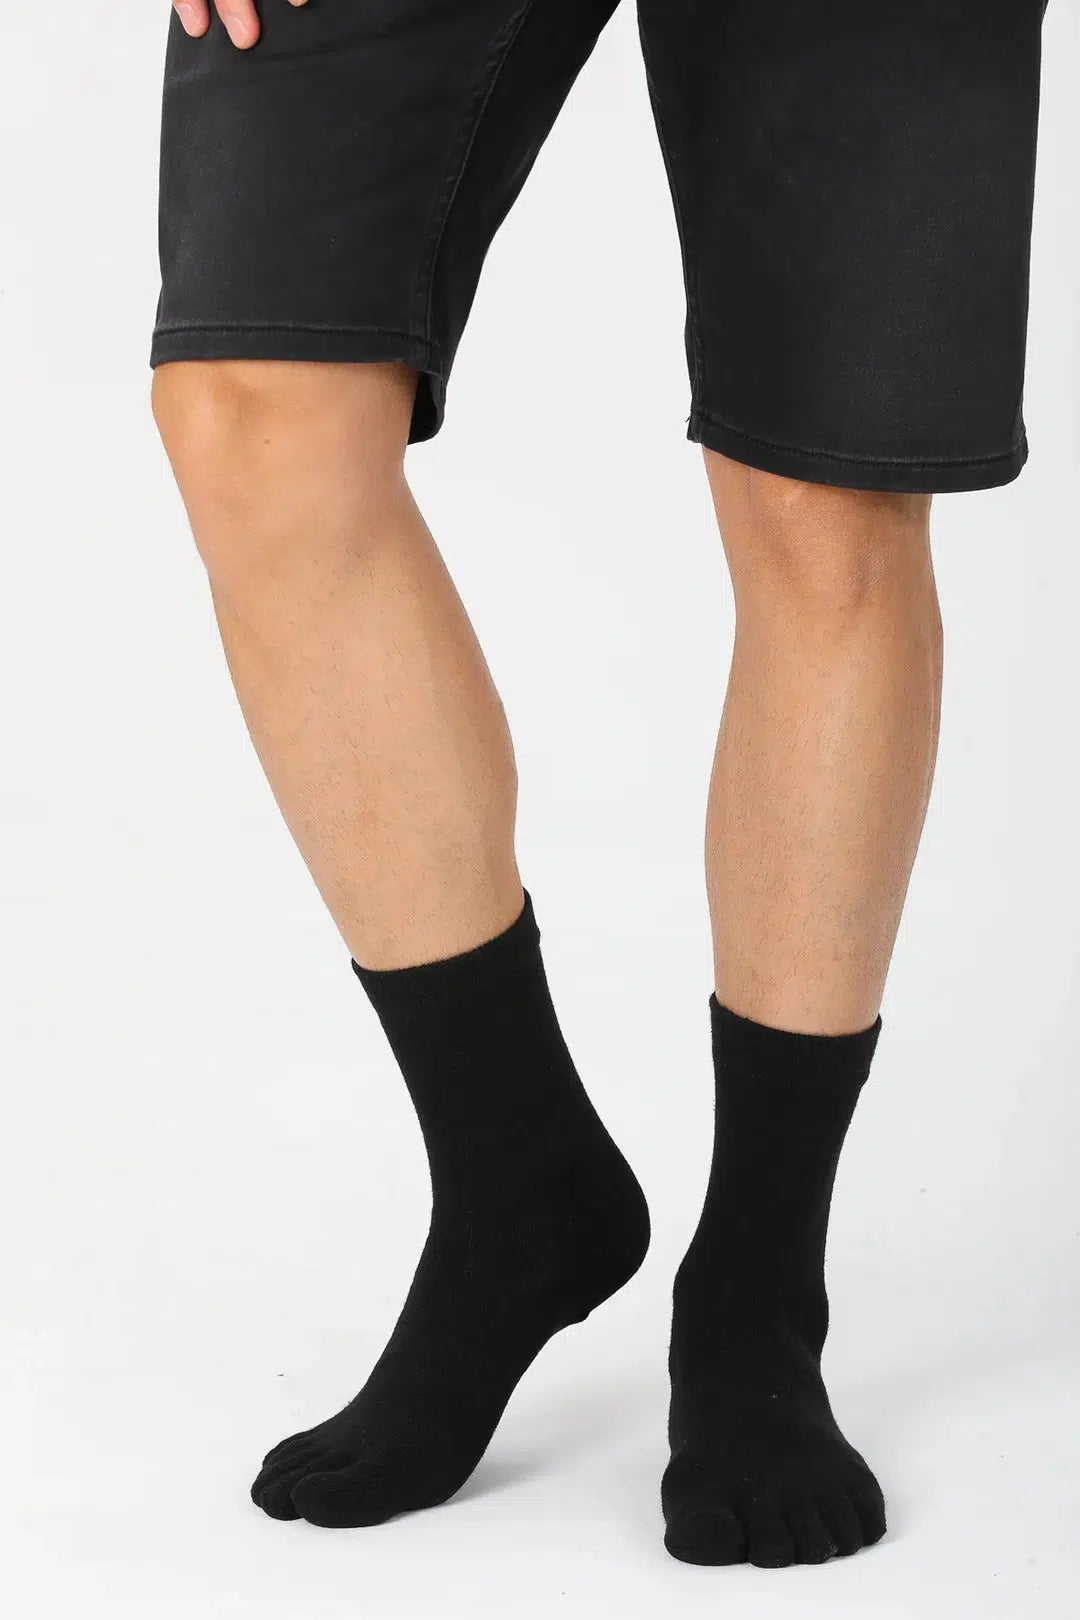 GoWith-full-black-toe-socks